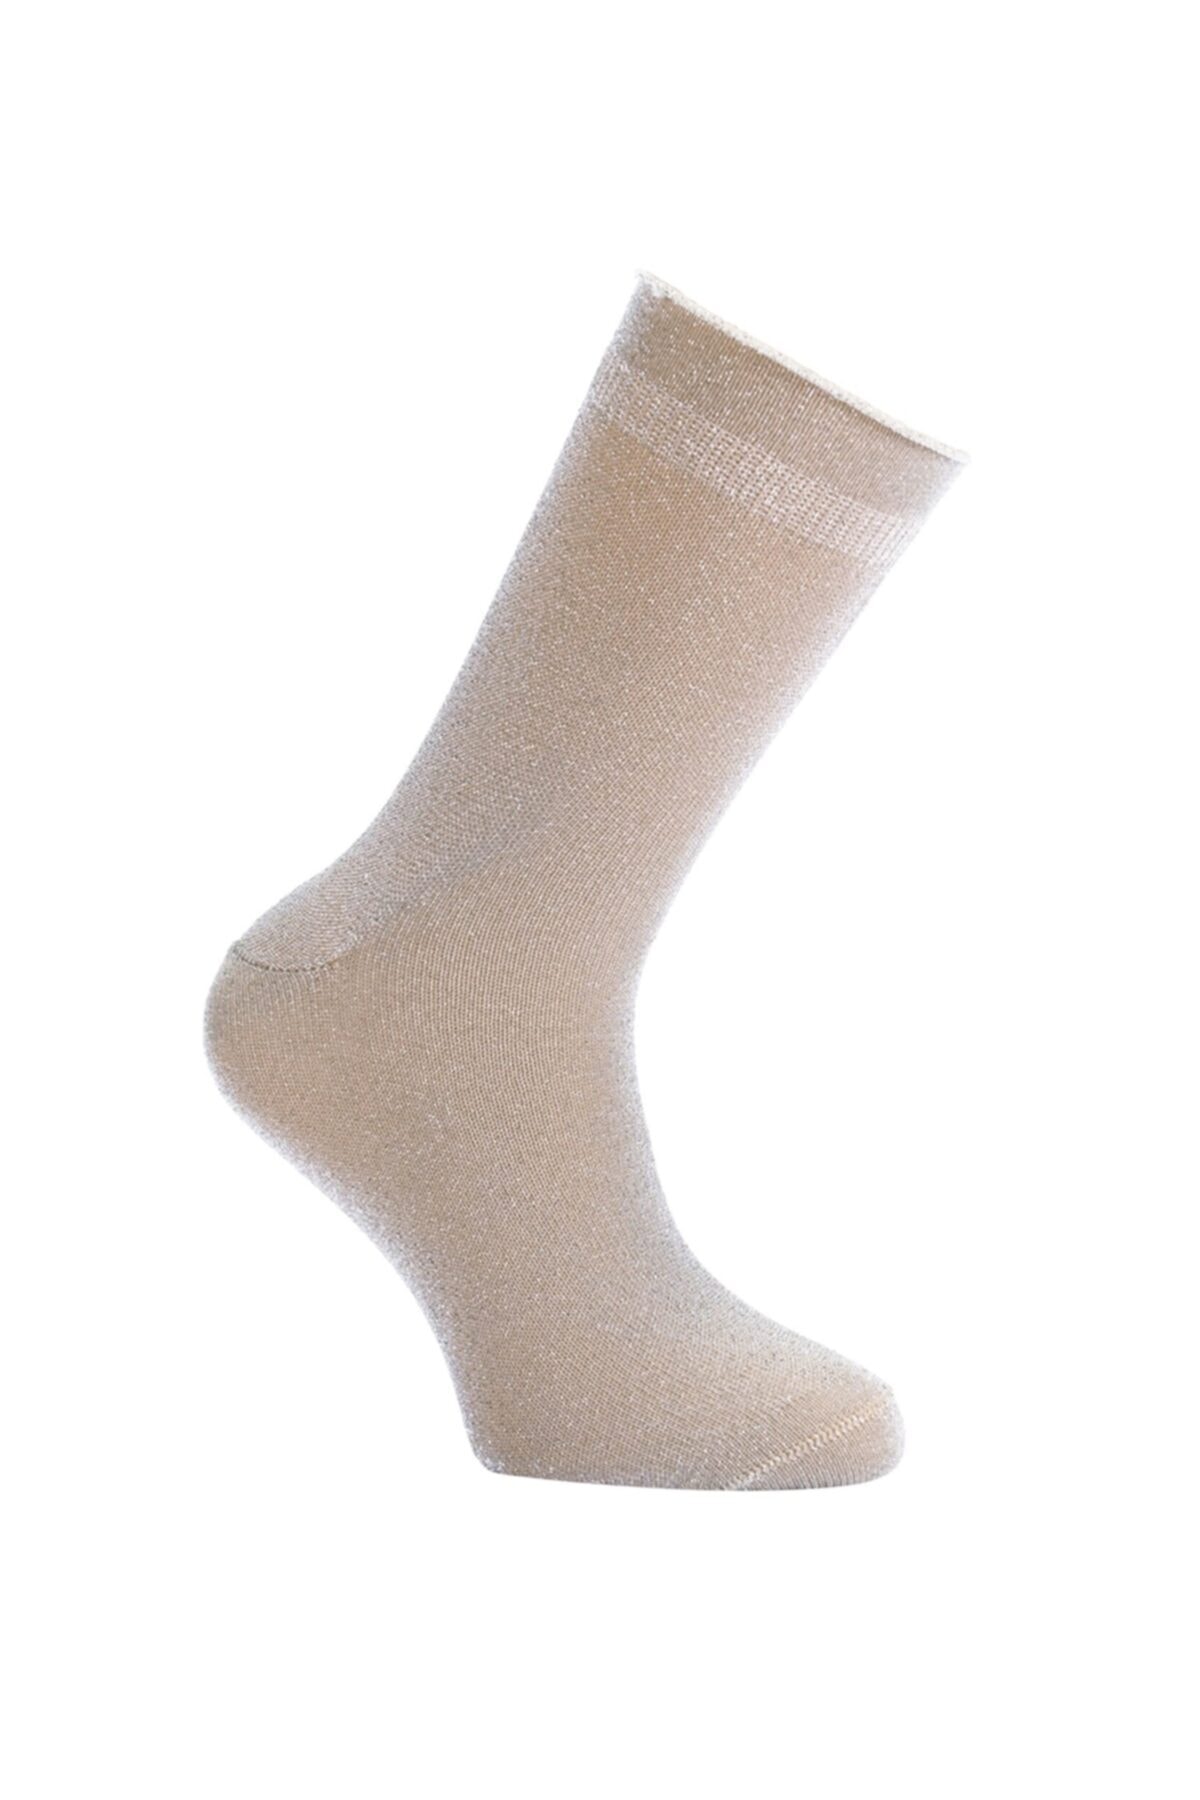 UNLIMITED LEGWEAR Bej Simli Ince Soket Çorap